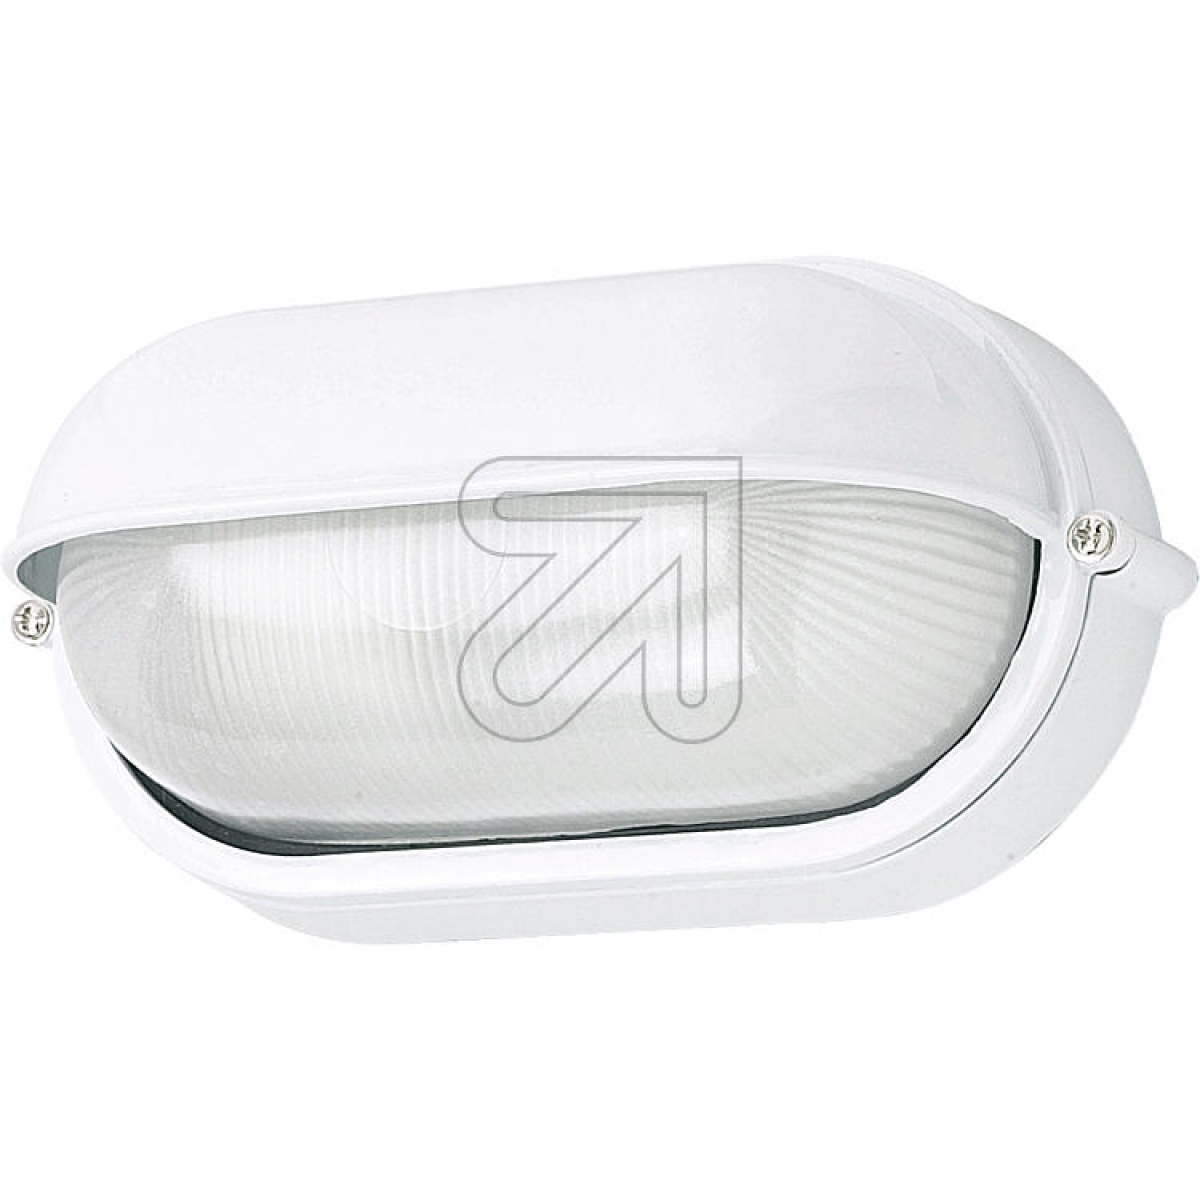 G & L GmbHWall light oval white 400180040Article-No: 621410